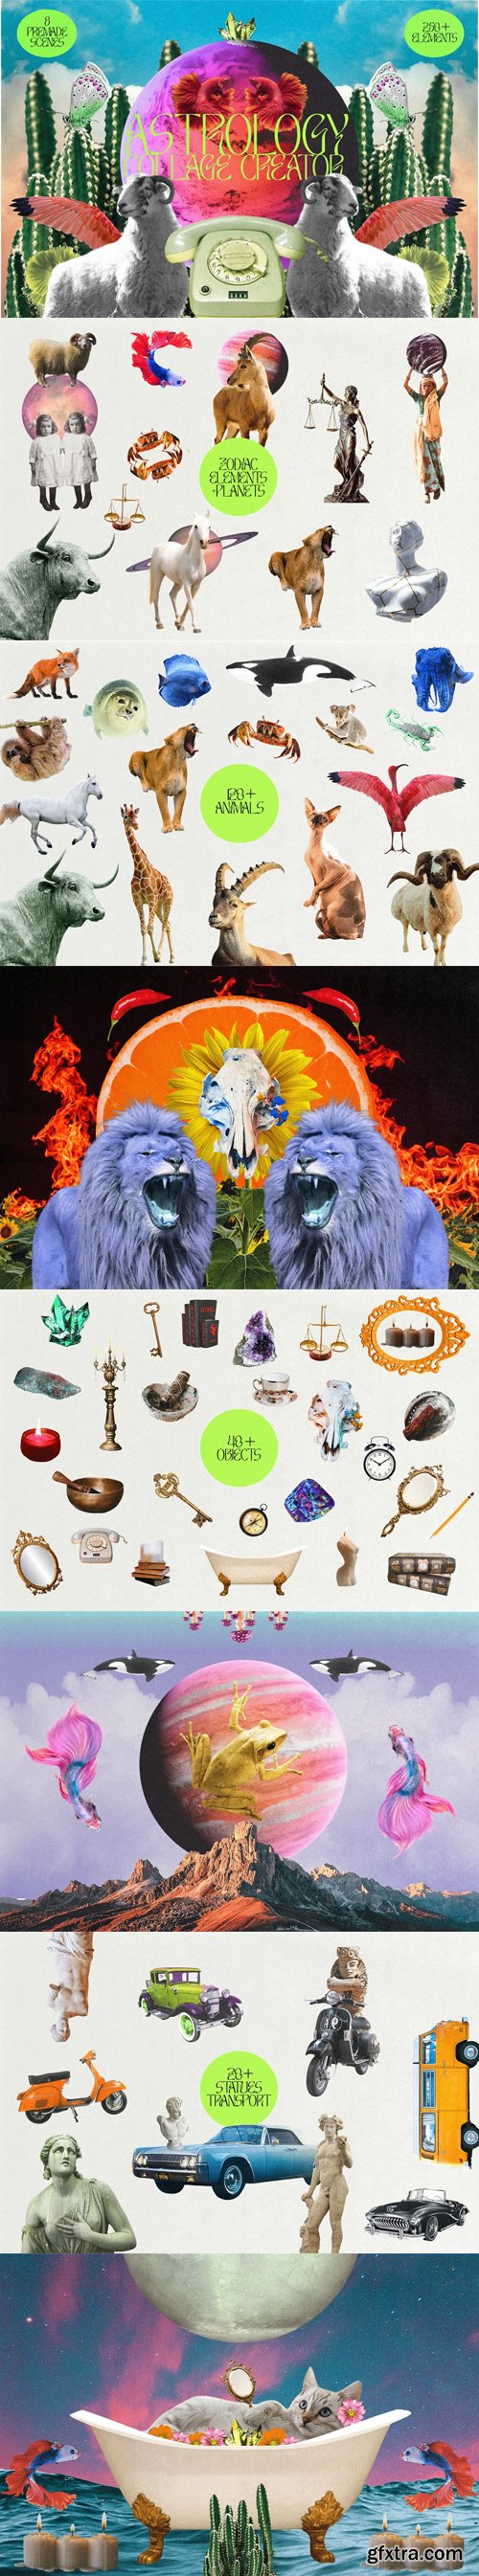 CreativeMarket - Astrology Collage Creator - 6988511